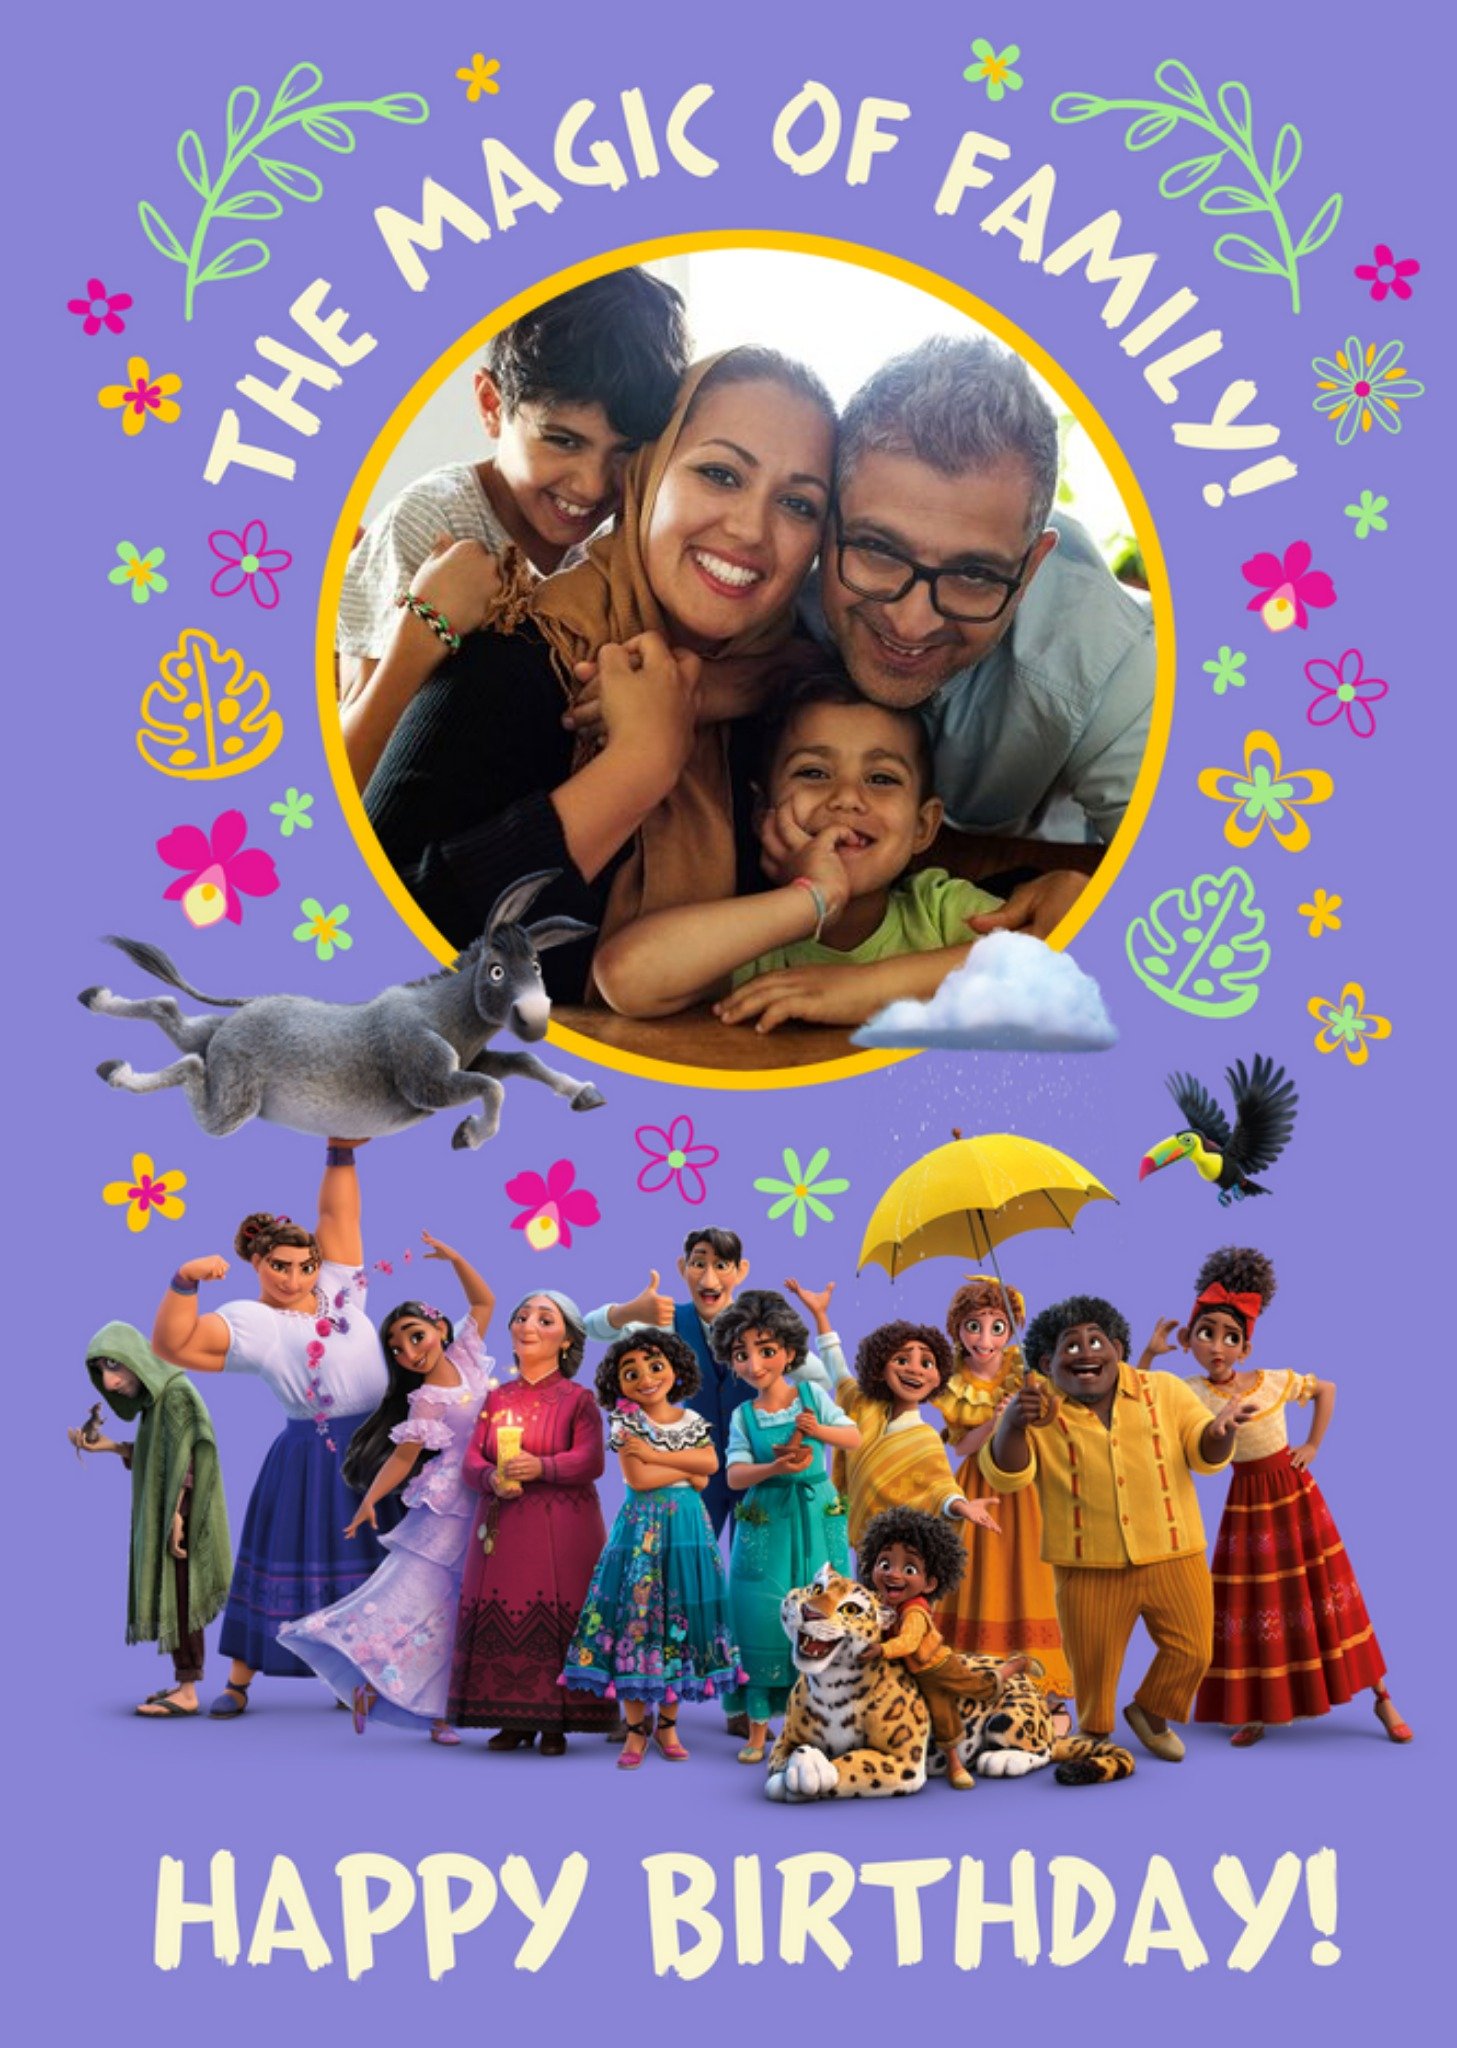 Disney Ecanto The Magic Of Family Photo Upload Birthday Card, Large